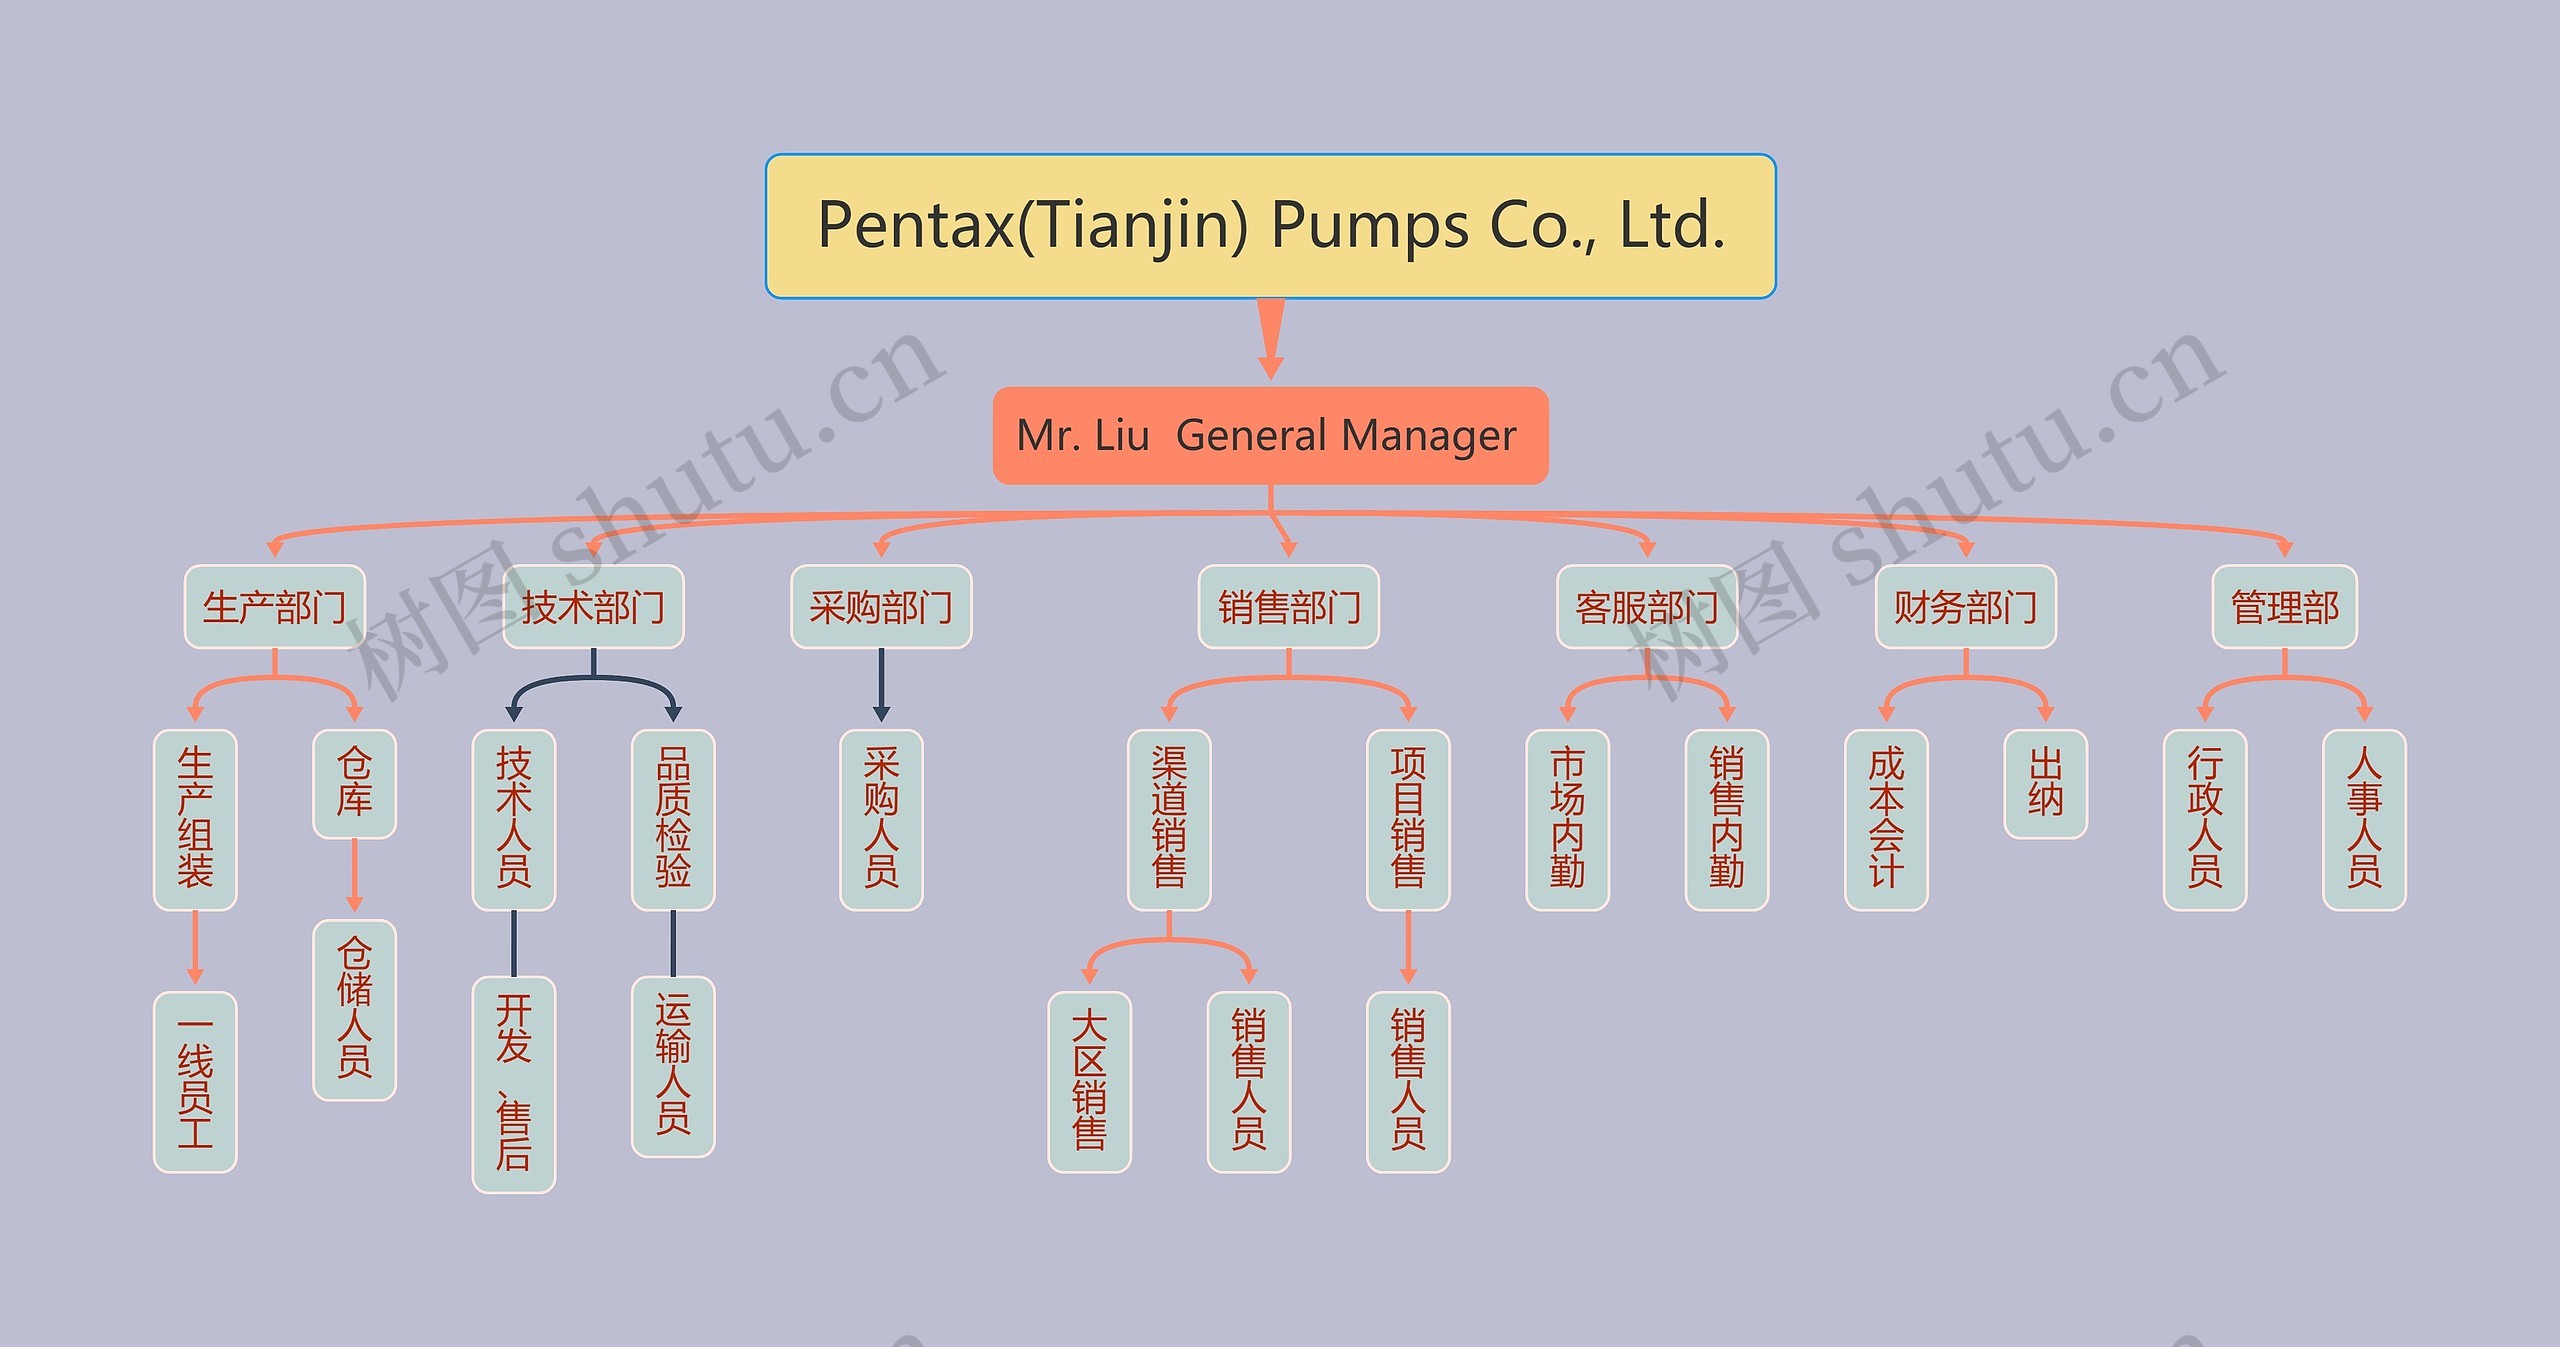 ﻿Pentax(Tianjin) Pumps Co., Ltd.思维导图